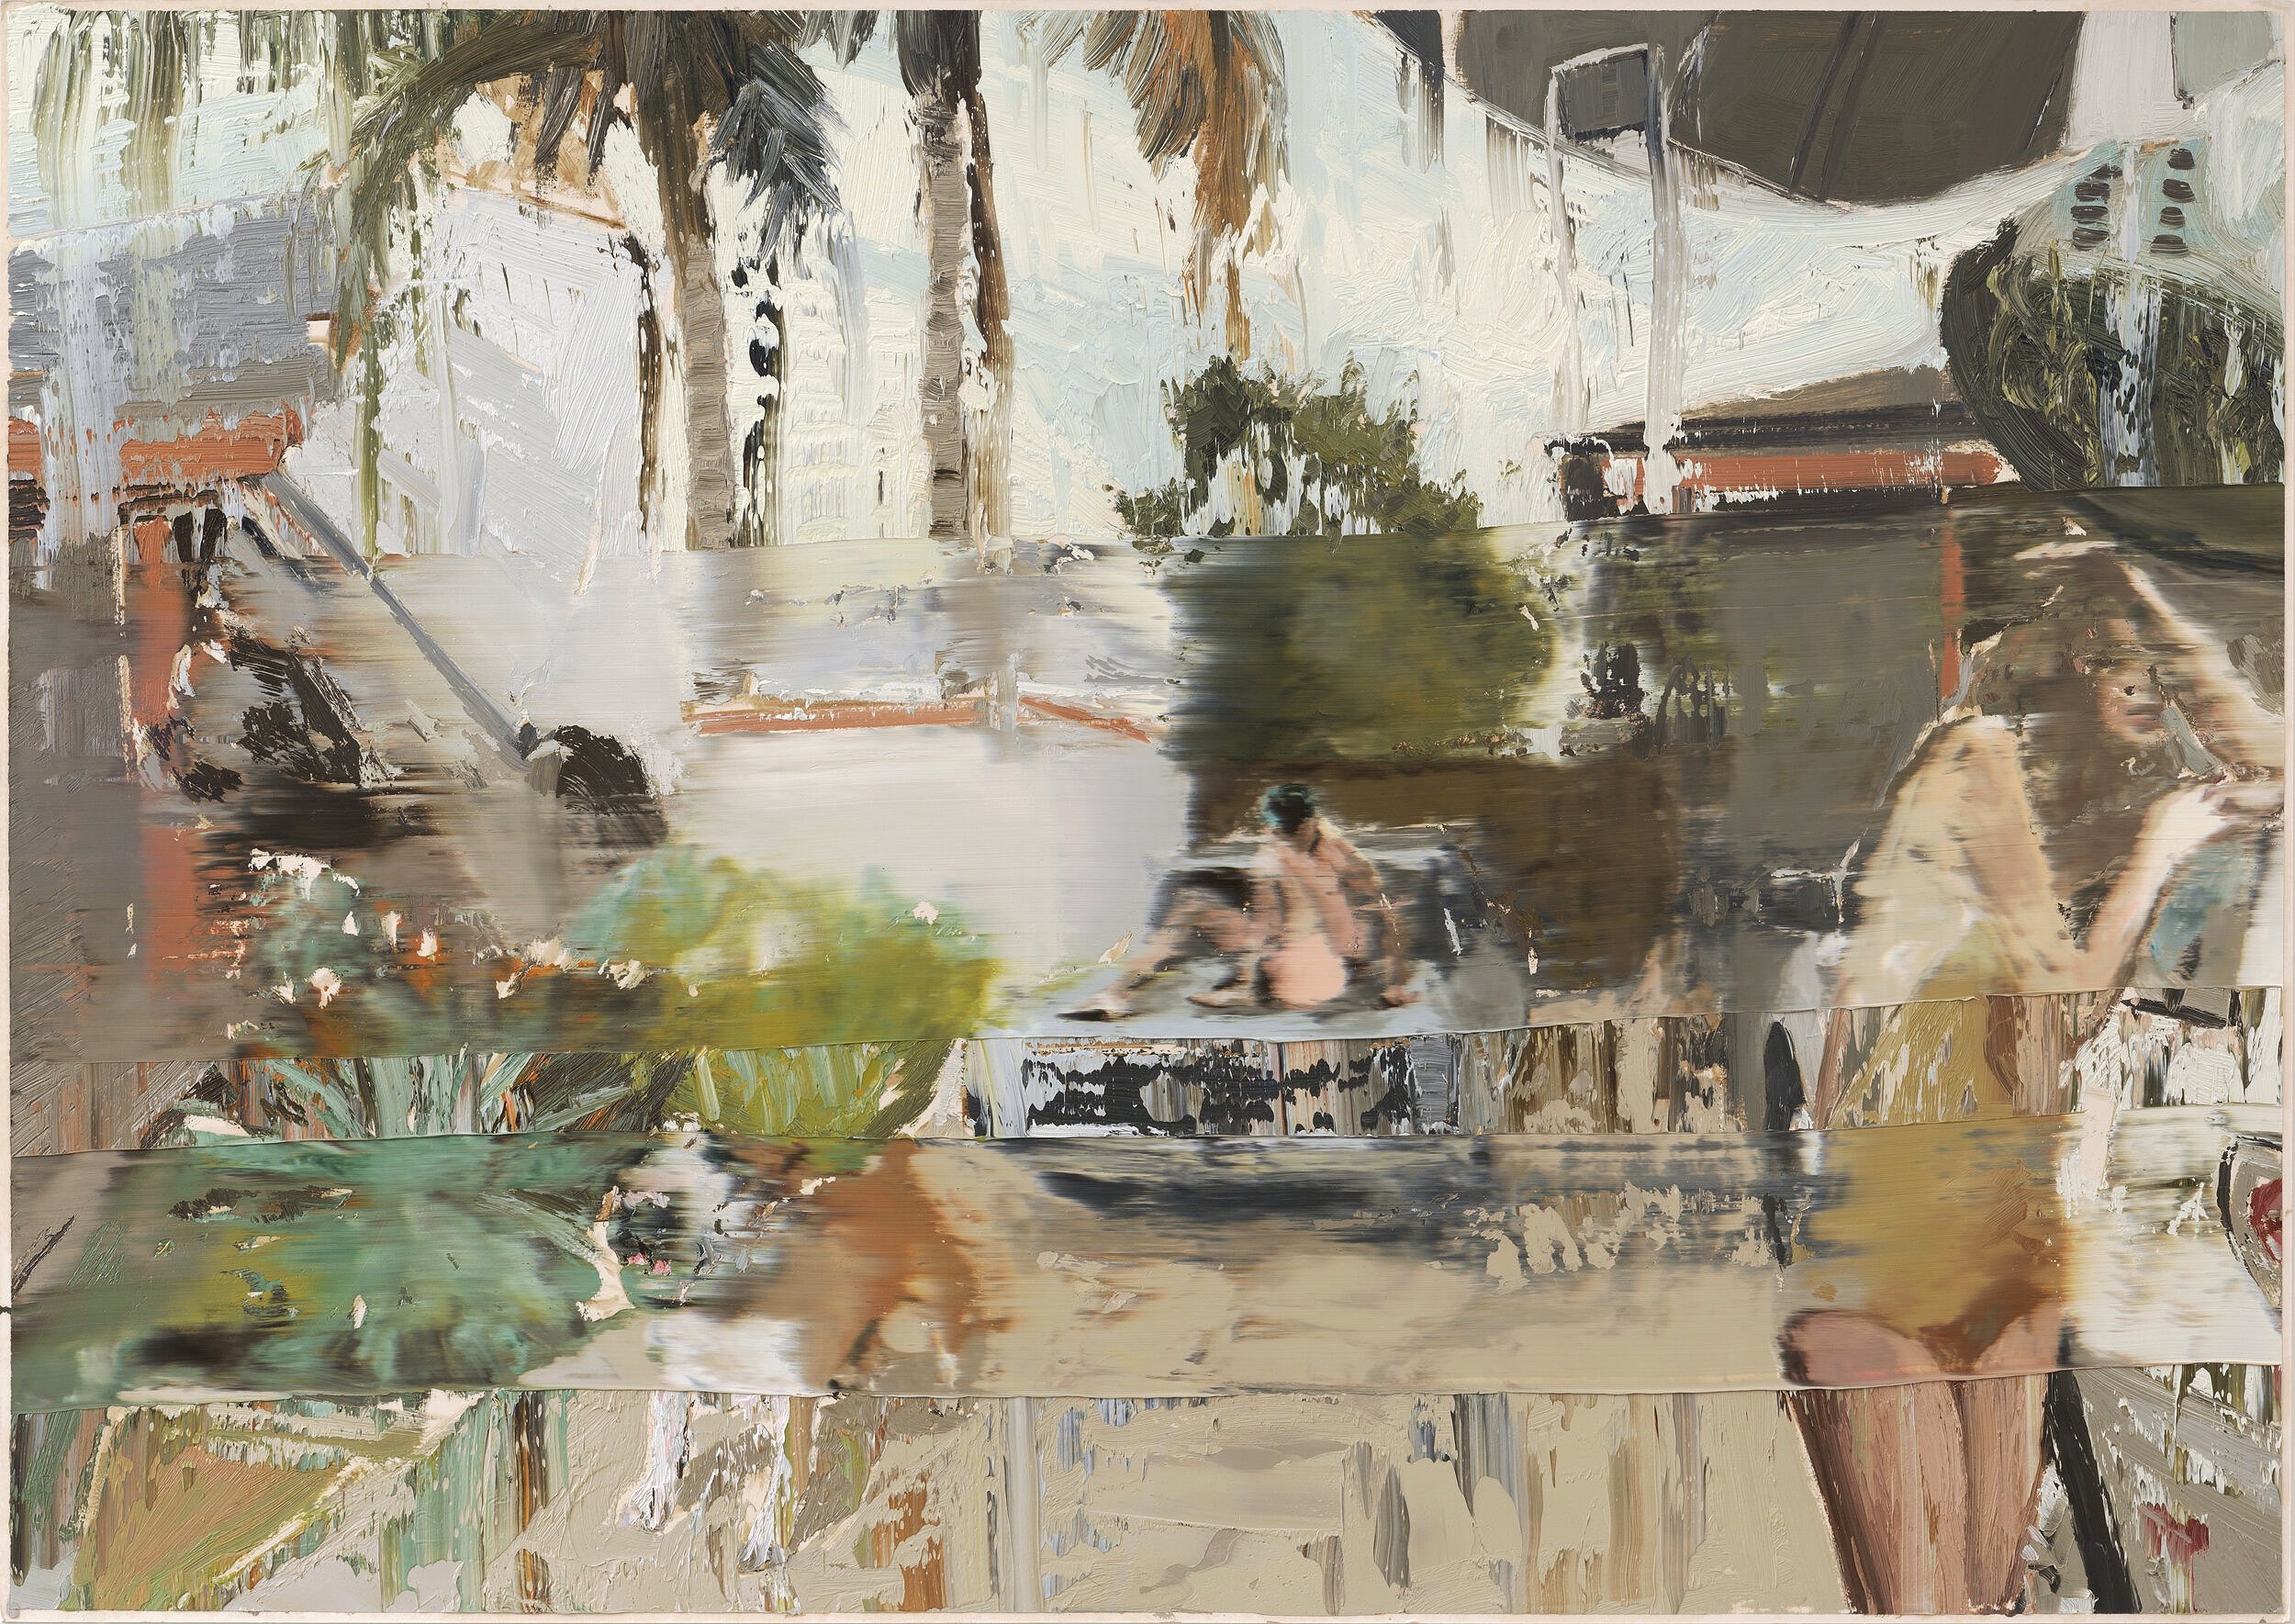   Study after Winston in Venice Beach,  2021                                                                                                              Oil on cardboard, 59 x 83.5 cm                                                                  